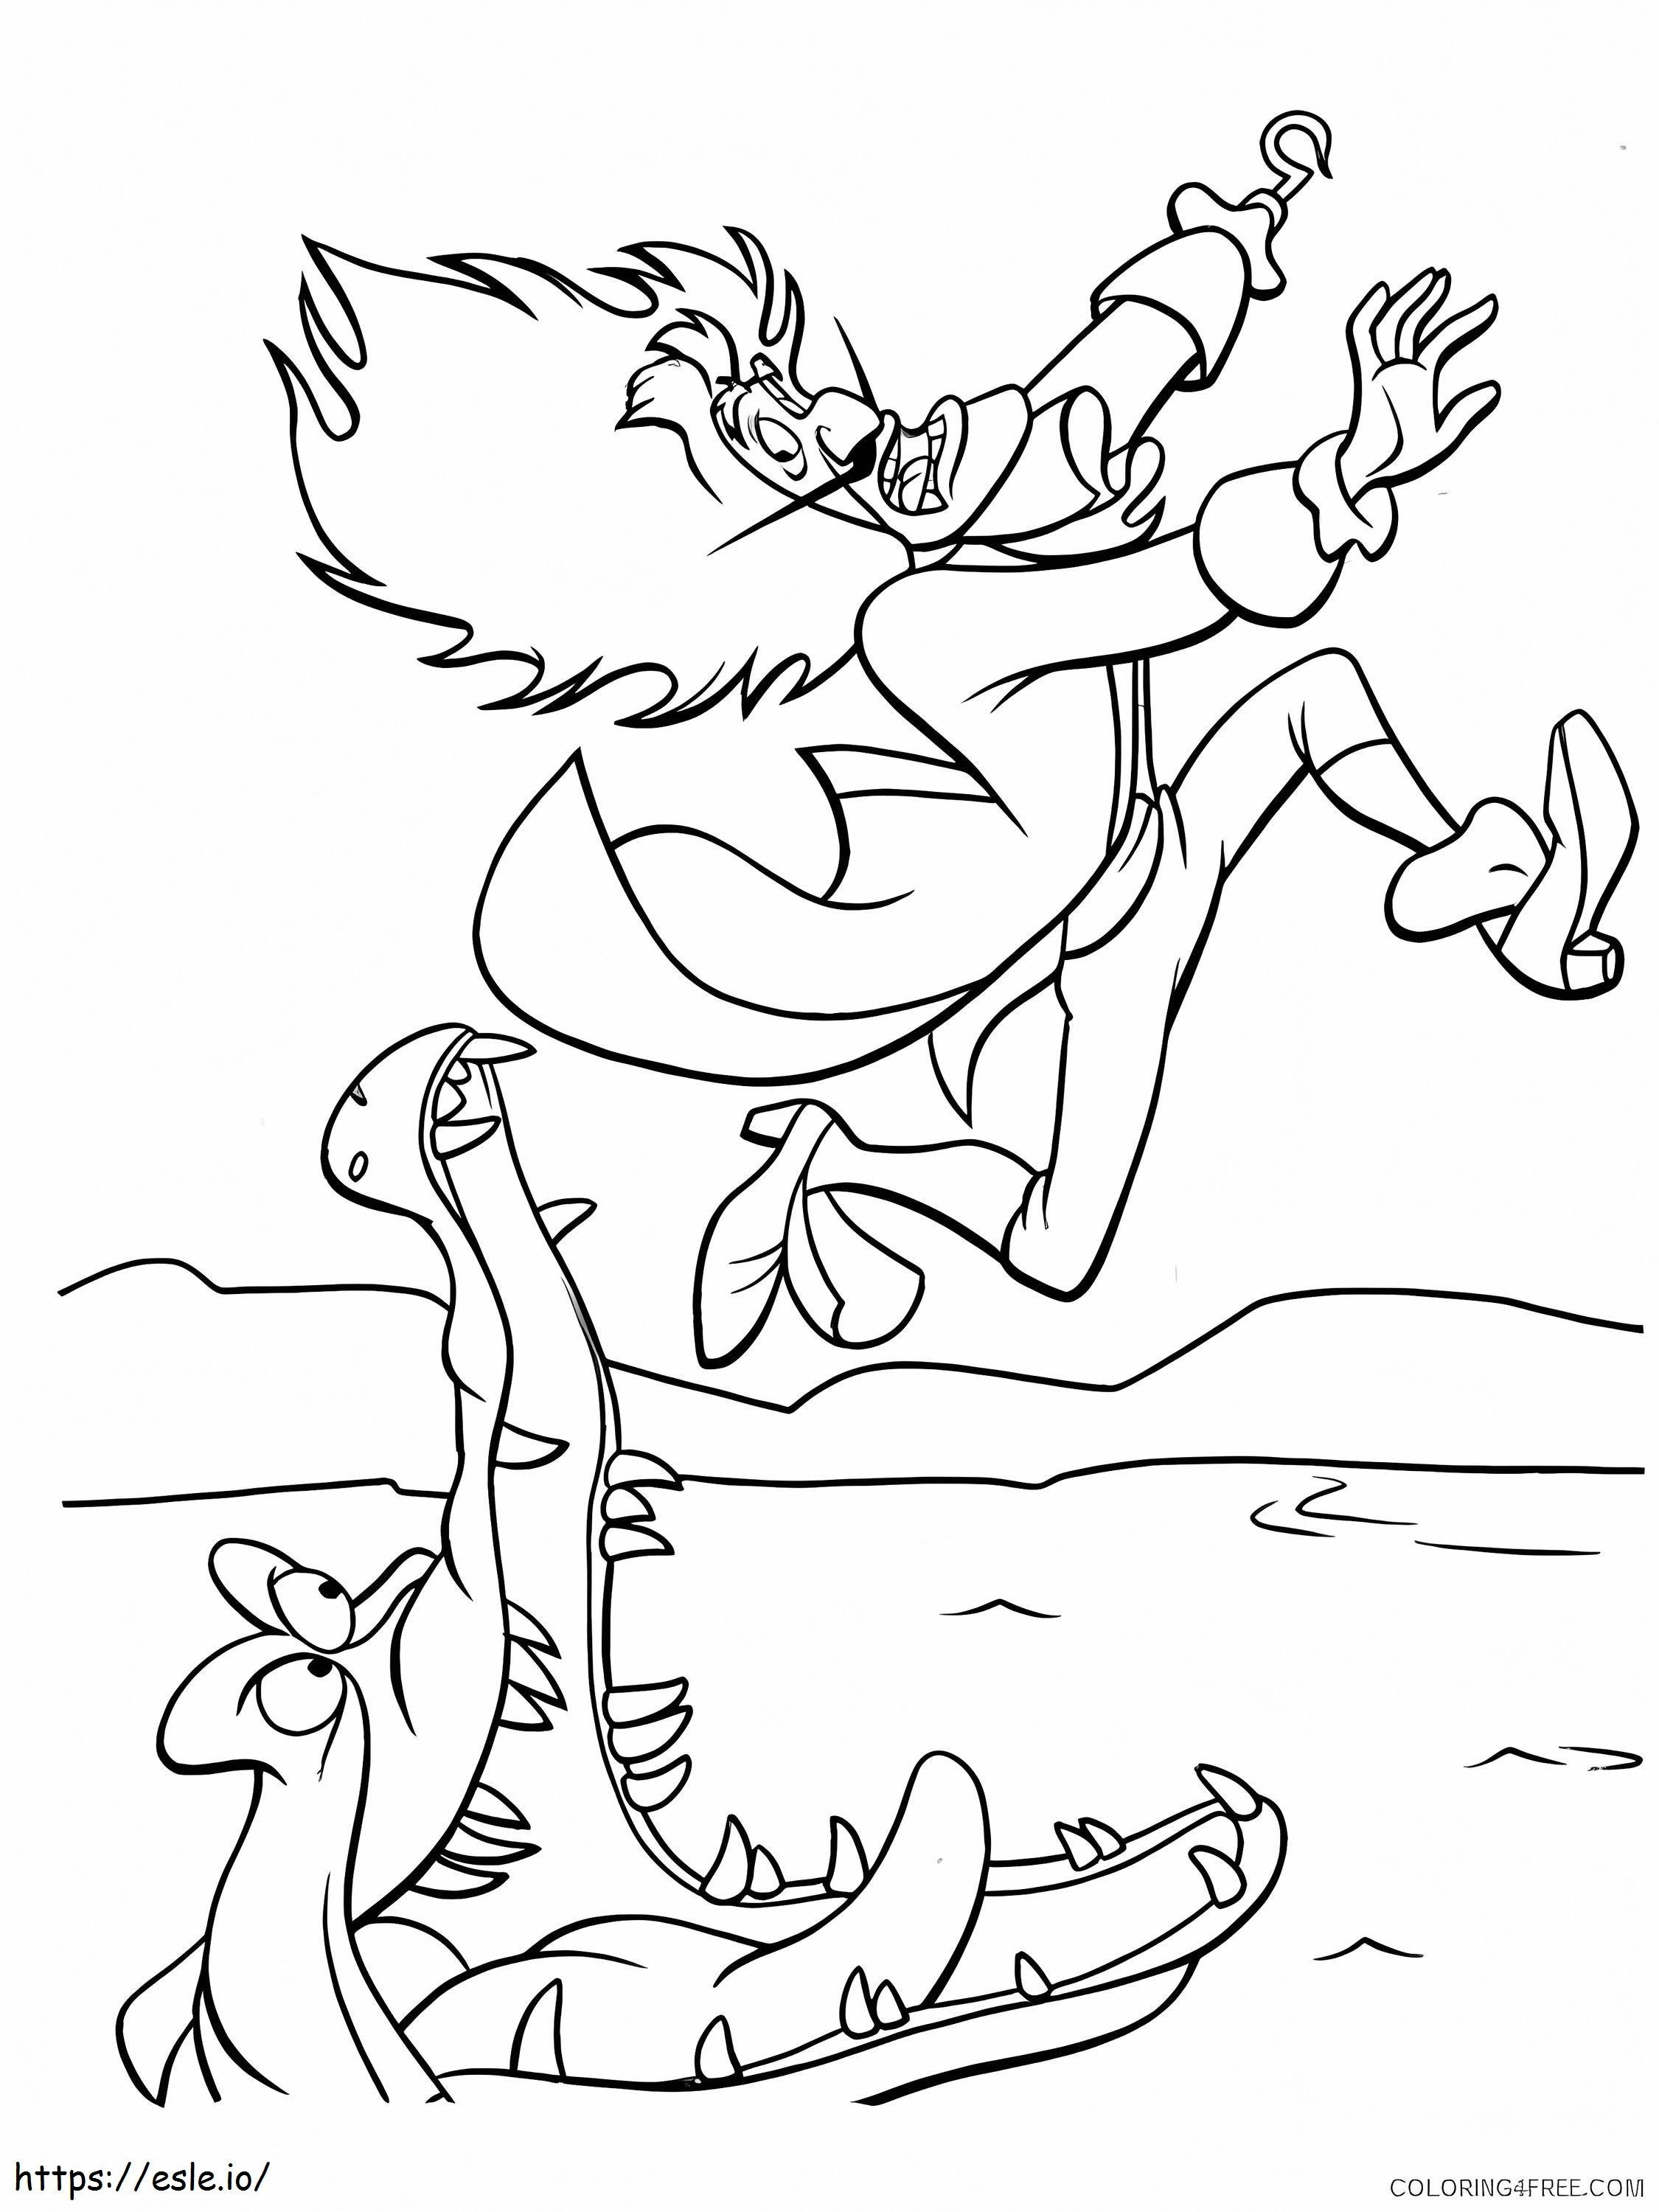 Crocodile Attack Captain Hook coloring page